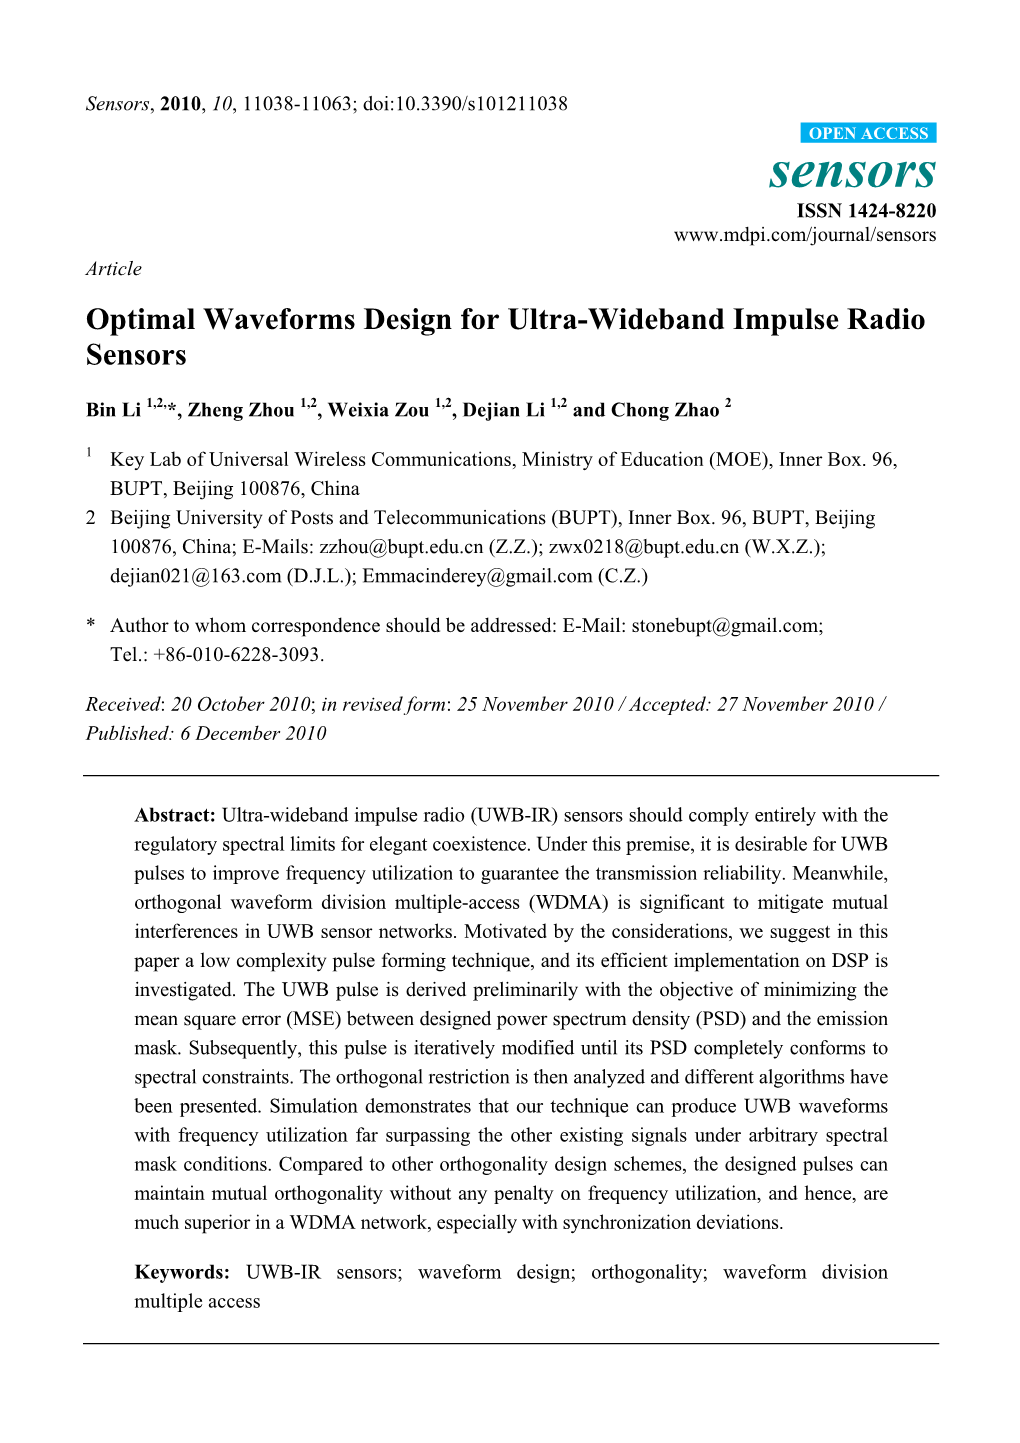 Optimal Waveforms Design for Ultra-Wideband Impulse Radio Sensors